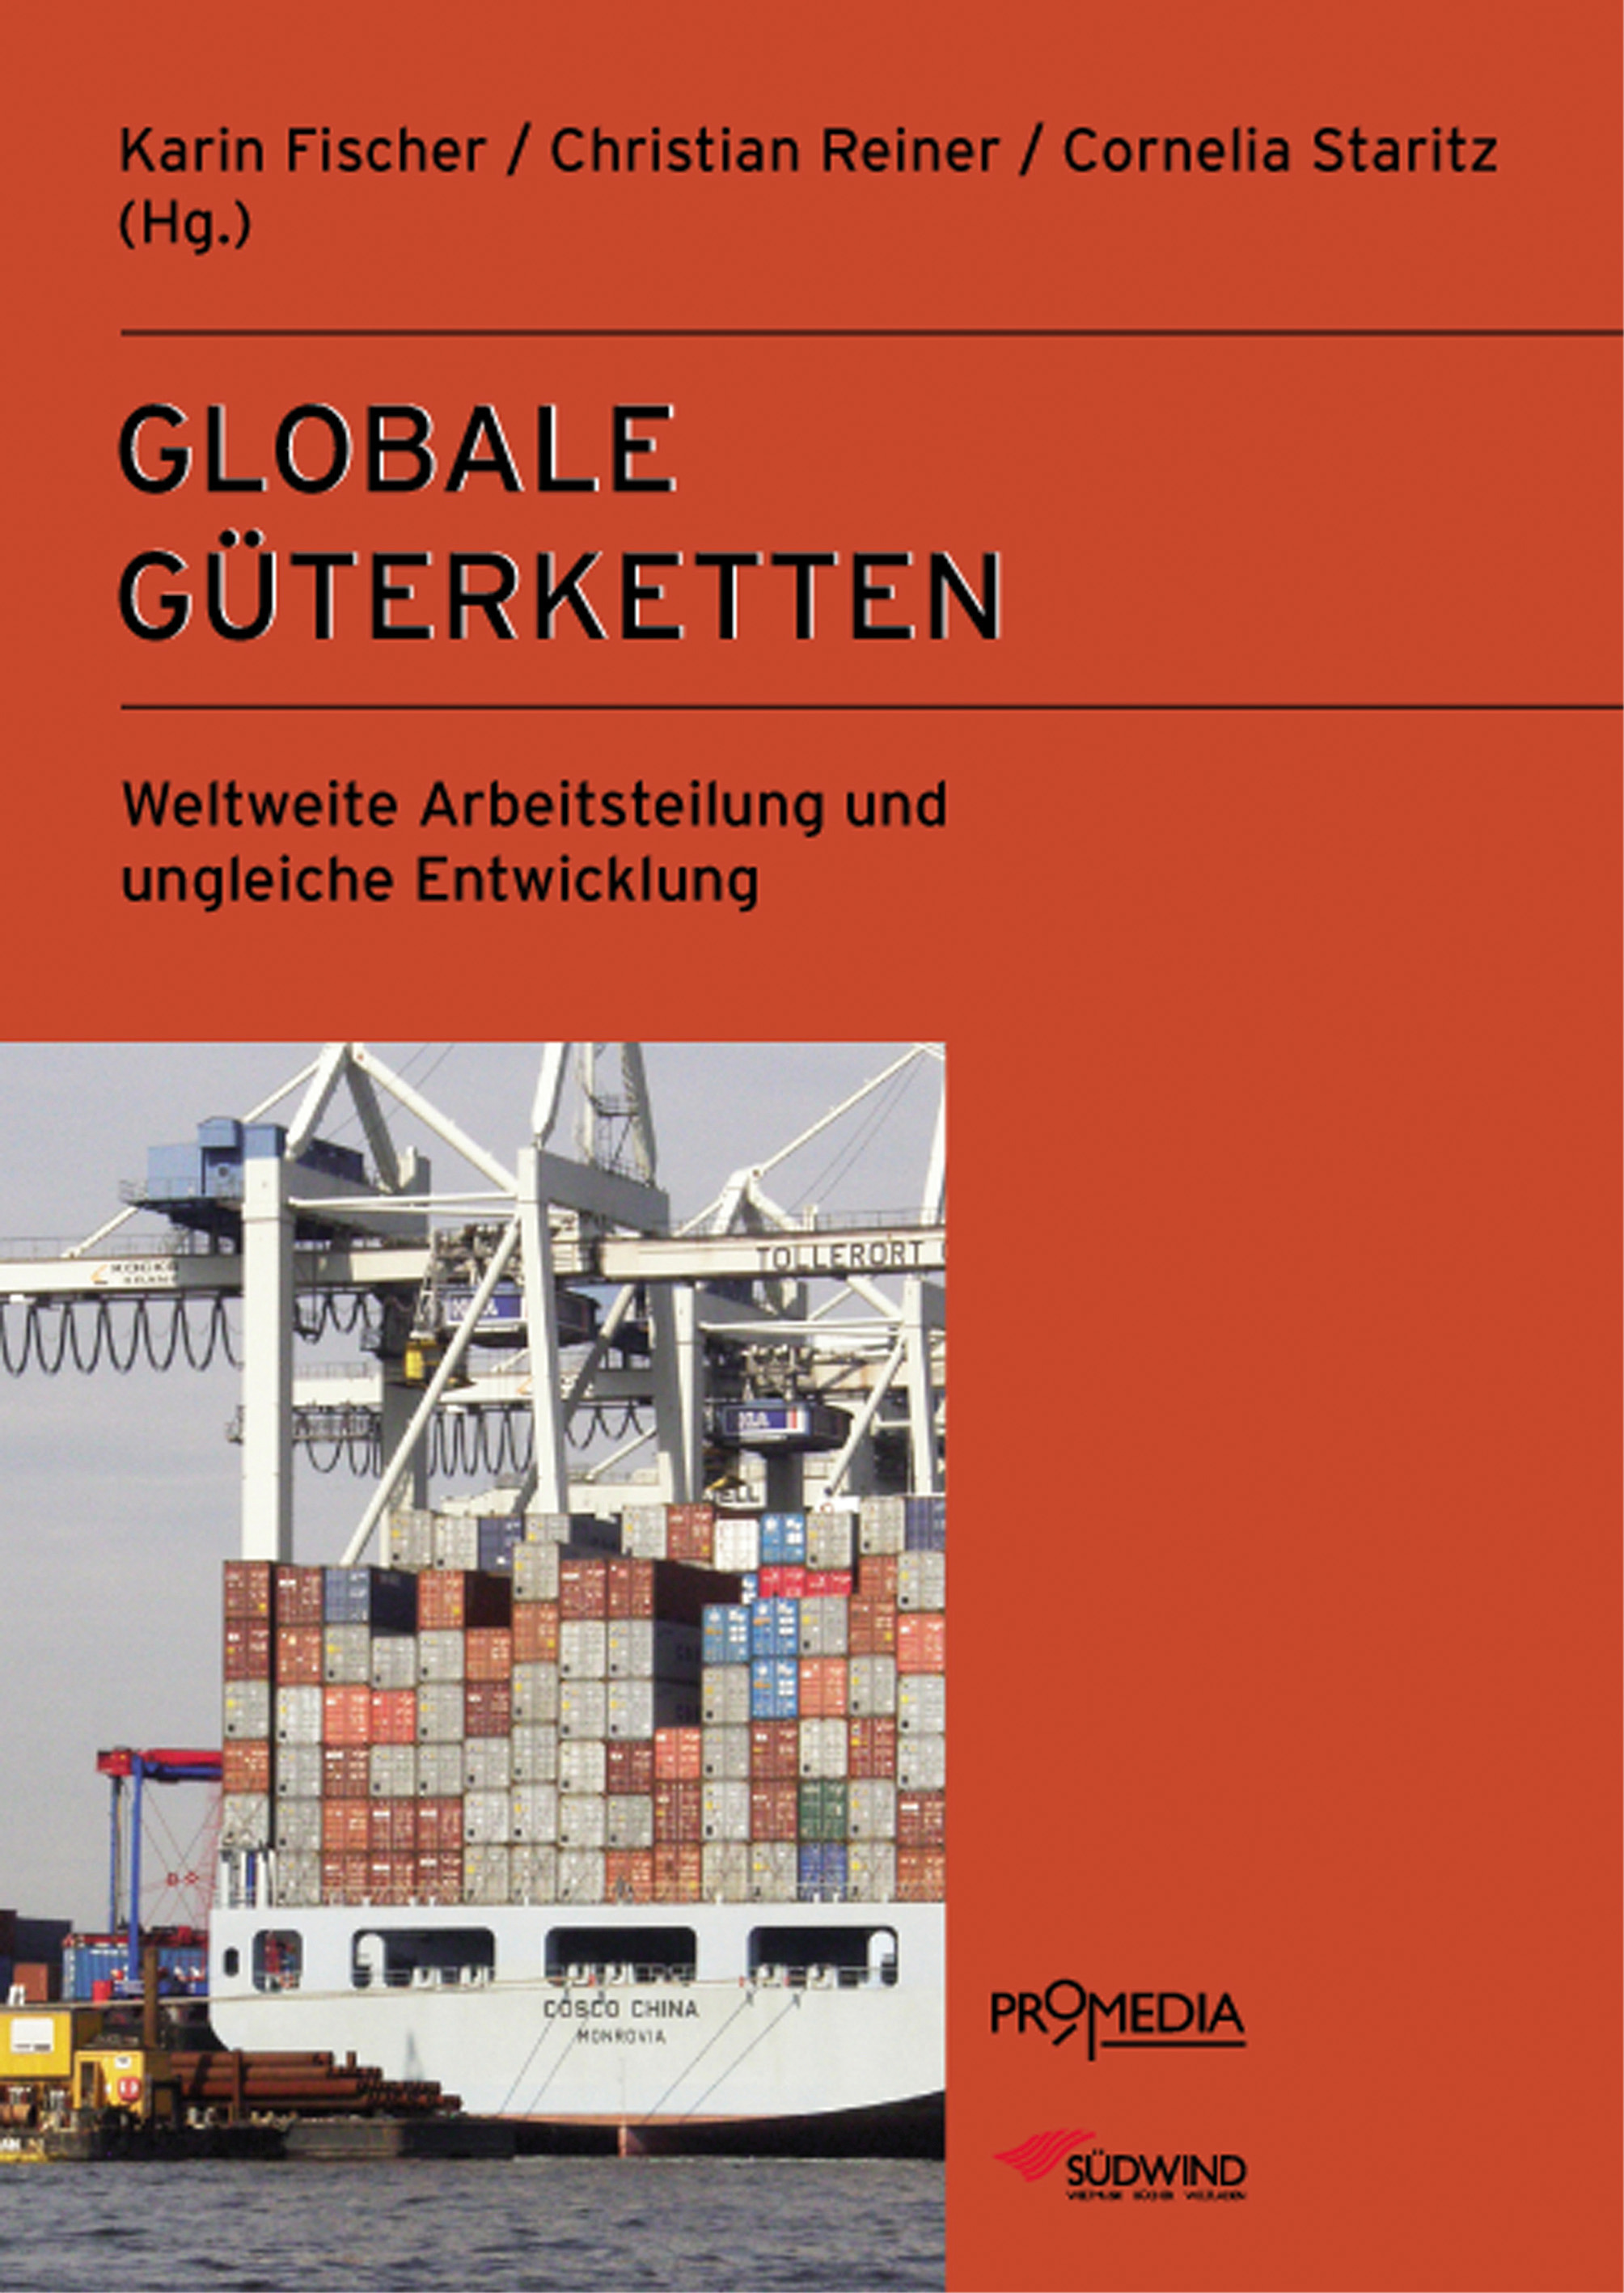 [Cover] Globale Güterketten